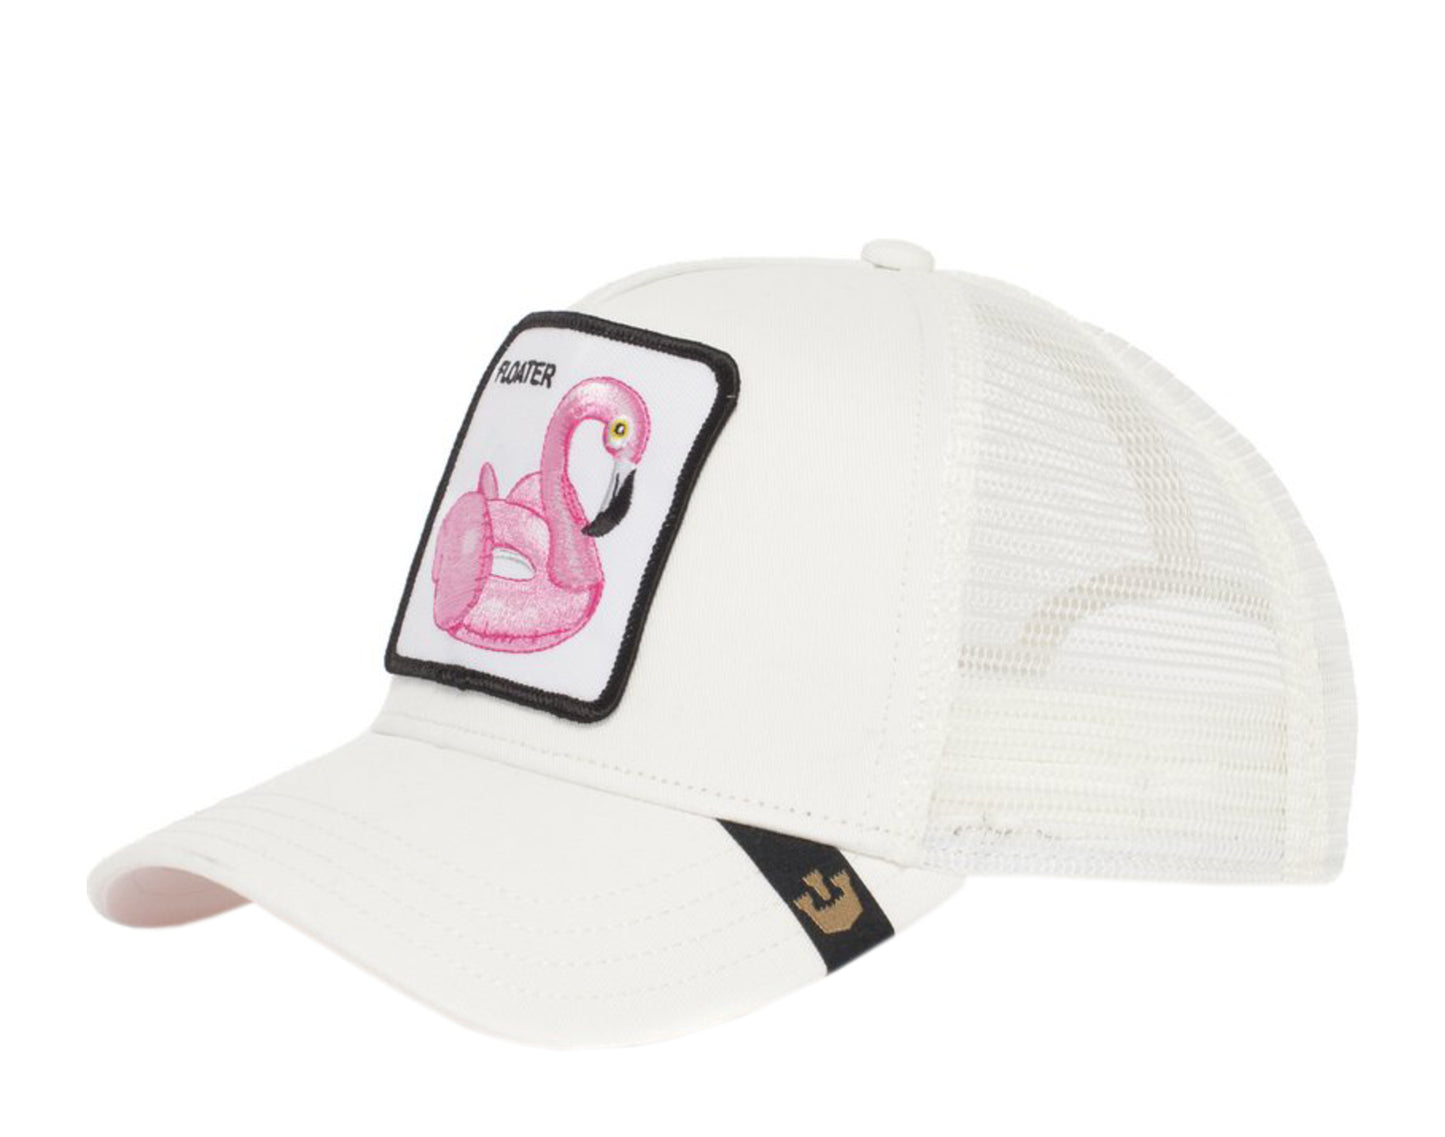 Goorin Bros Floater Flamingo Ivory/Pink Trucker Hat 101-0330-IVO